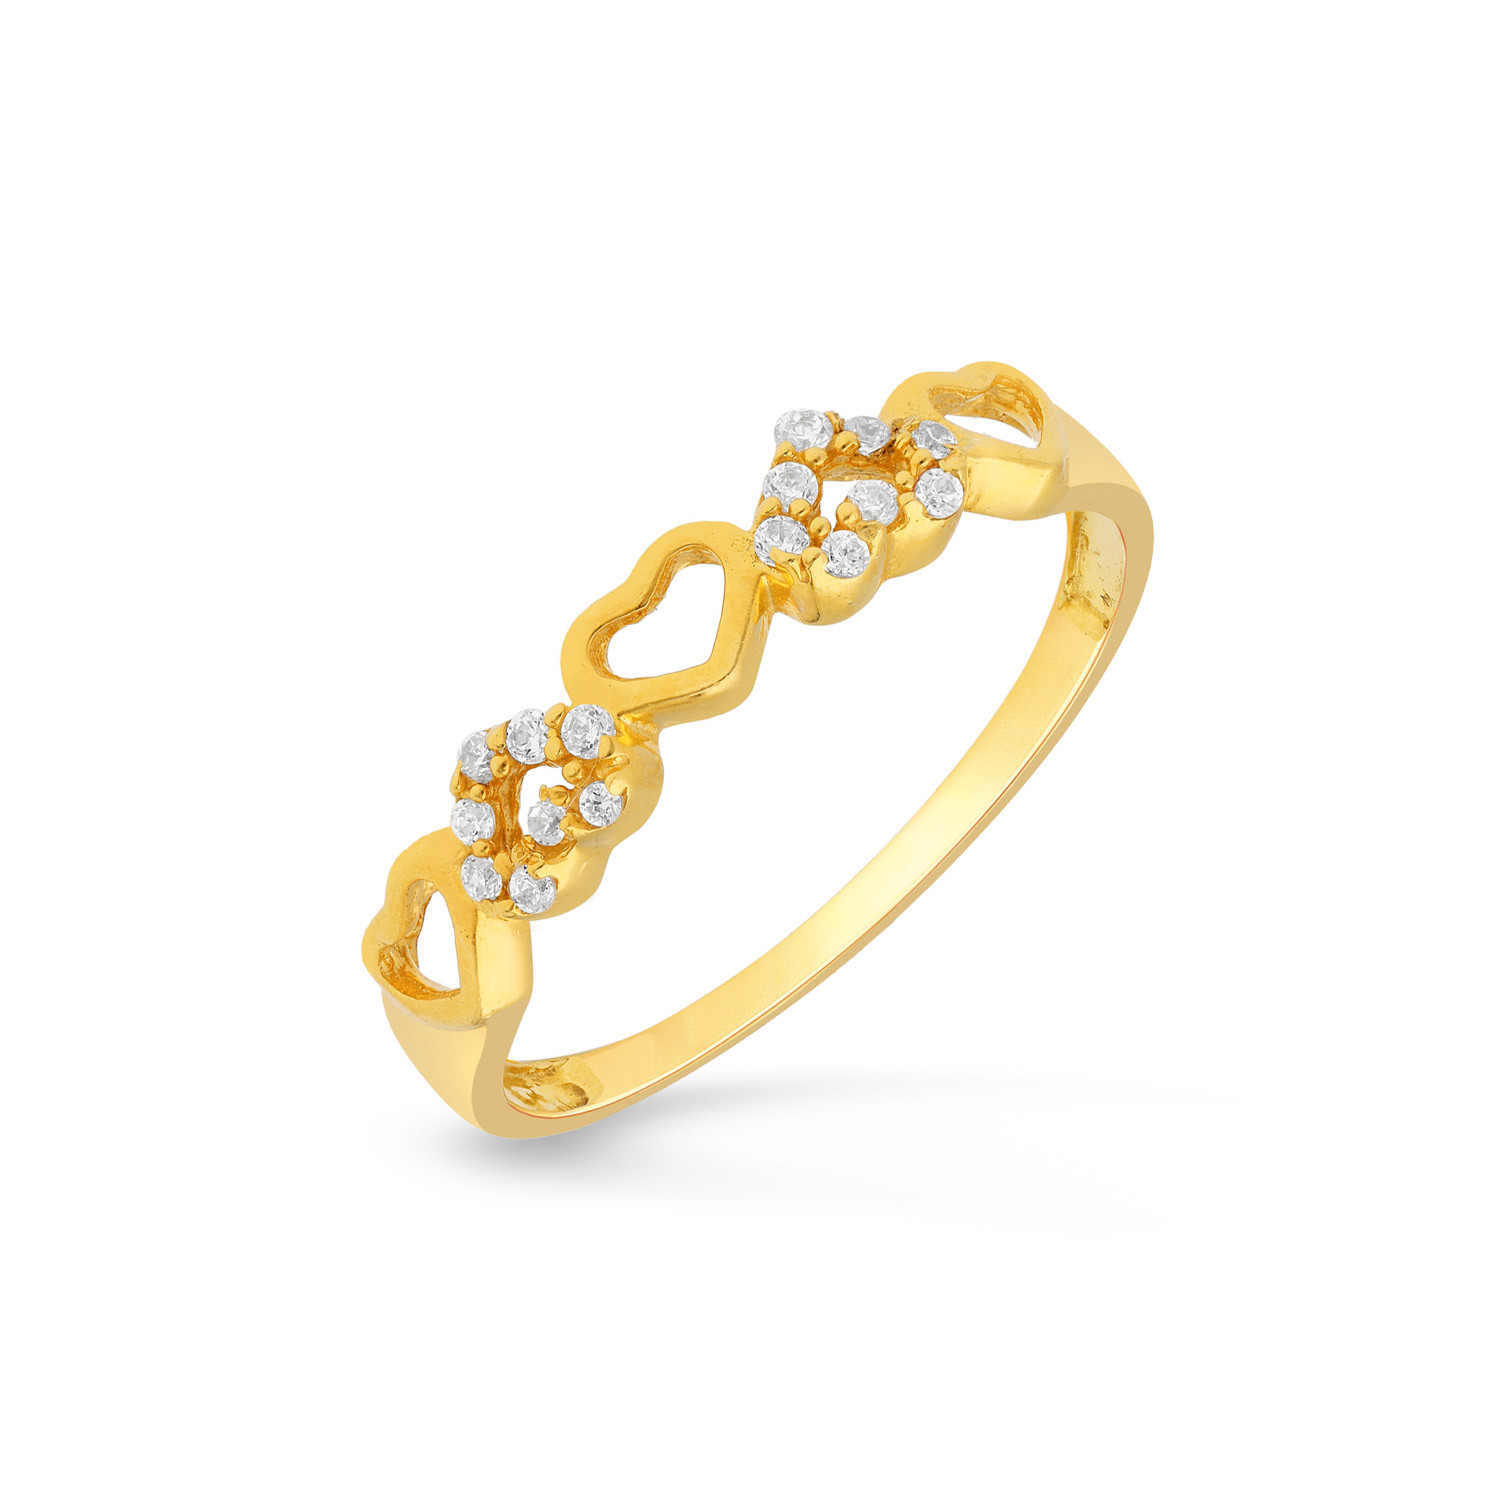 Malabar 22 KT Gold Studded Casual Ring FRGEDZRURGW740